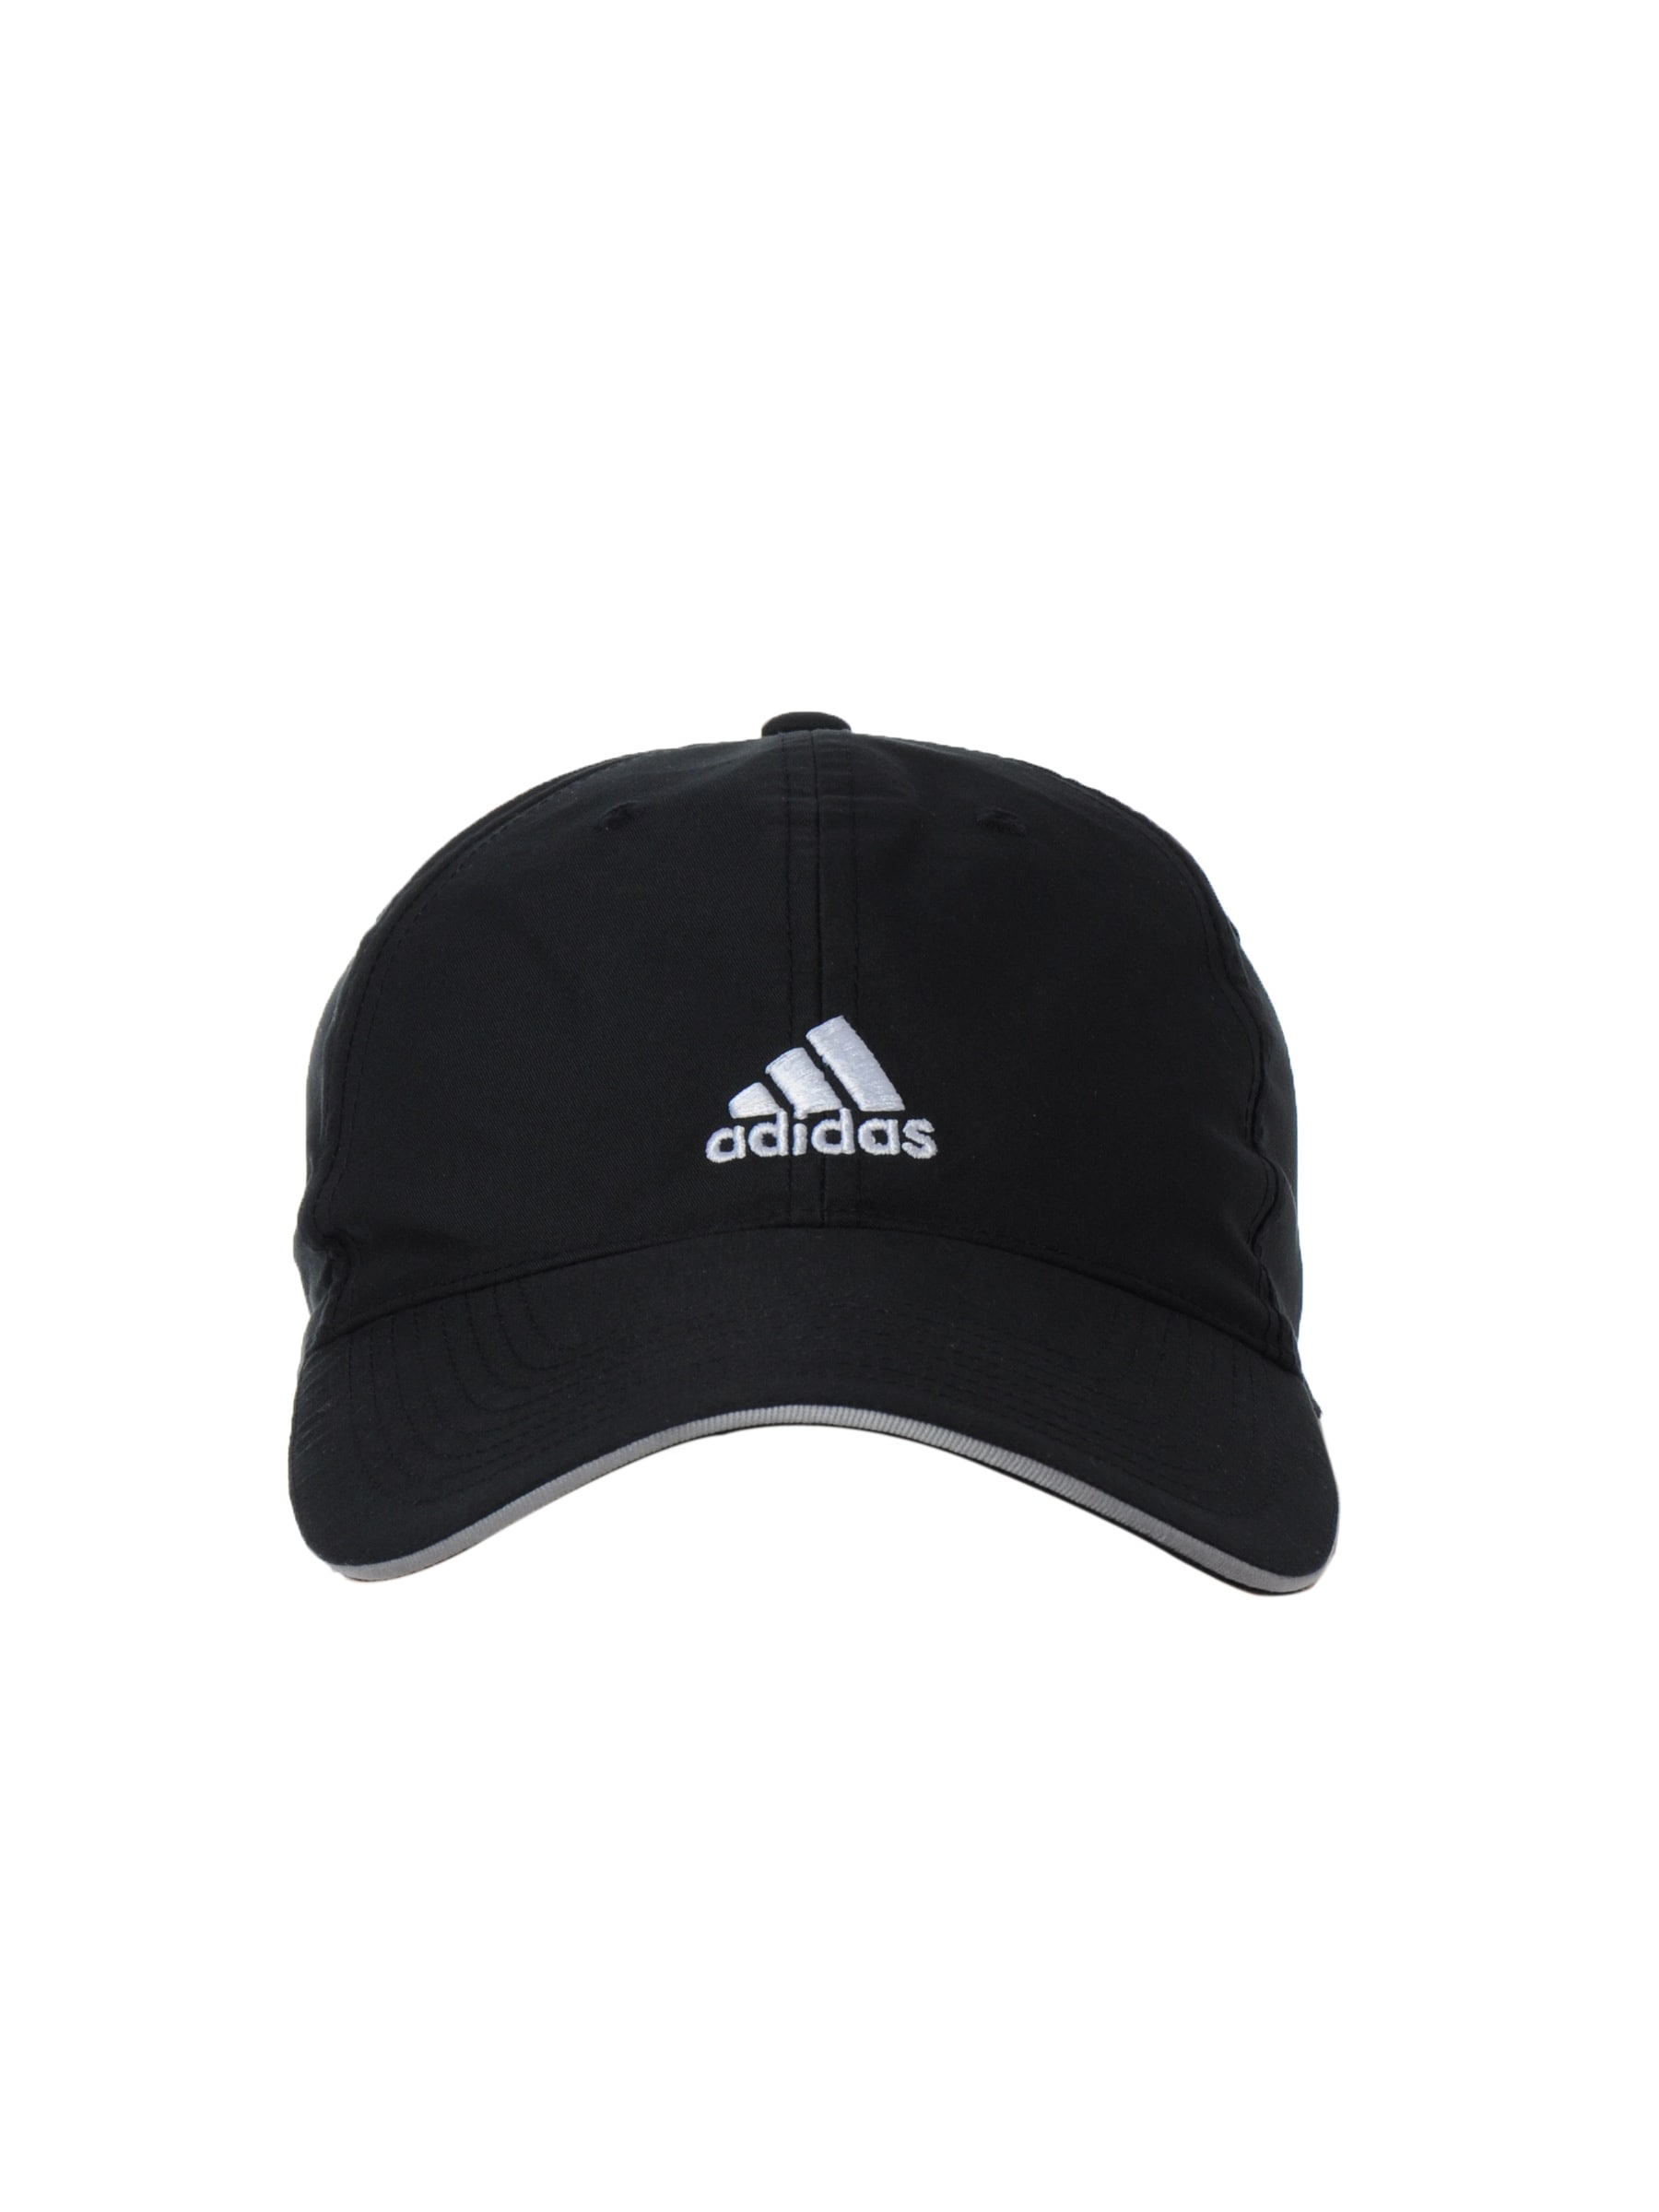 ADIDAS Unisex Sports Black Caps